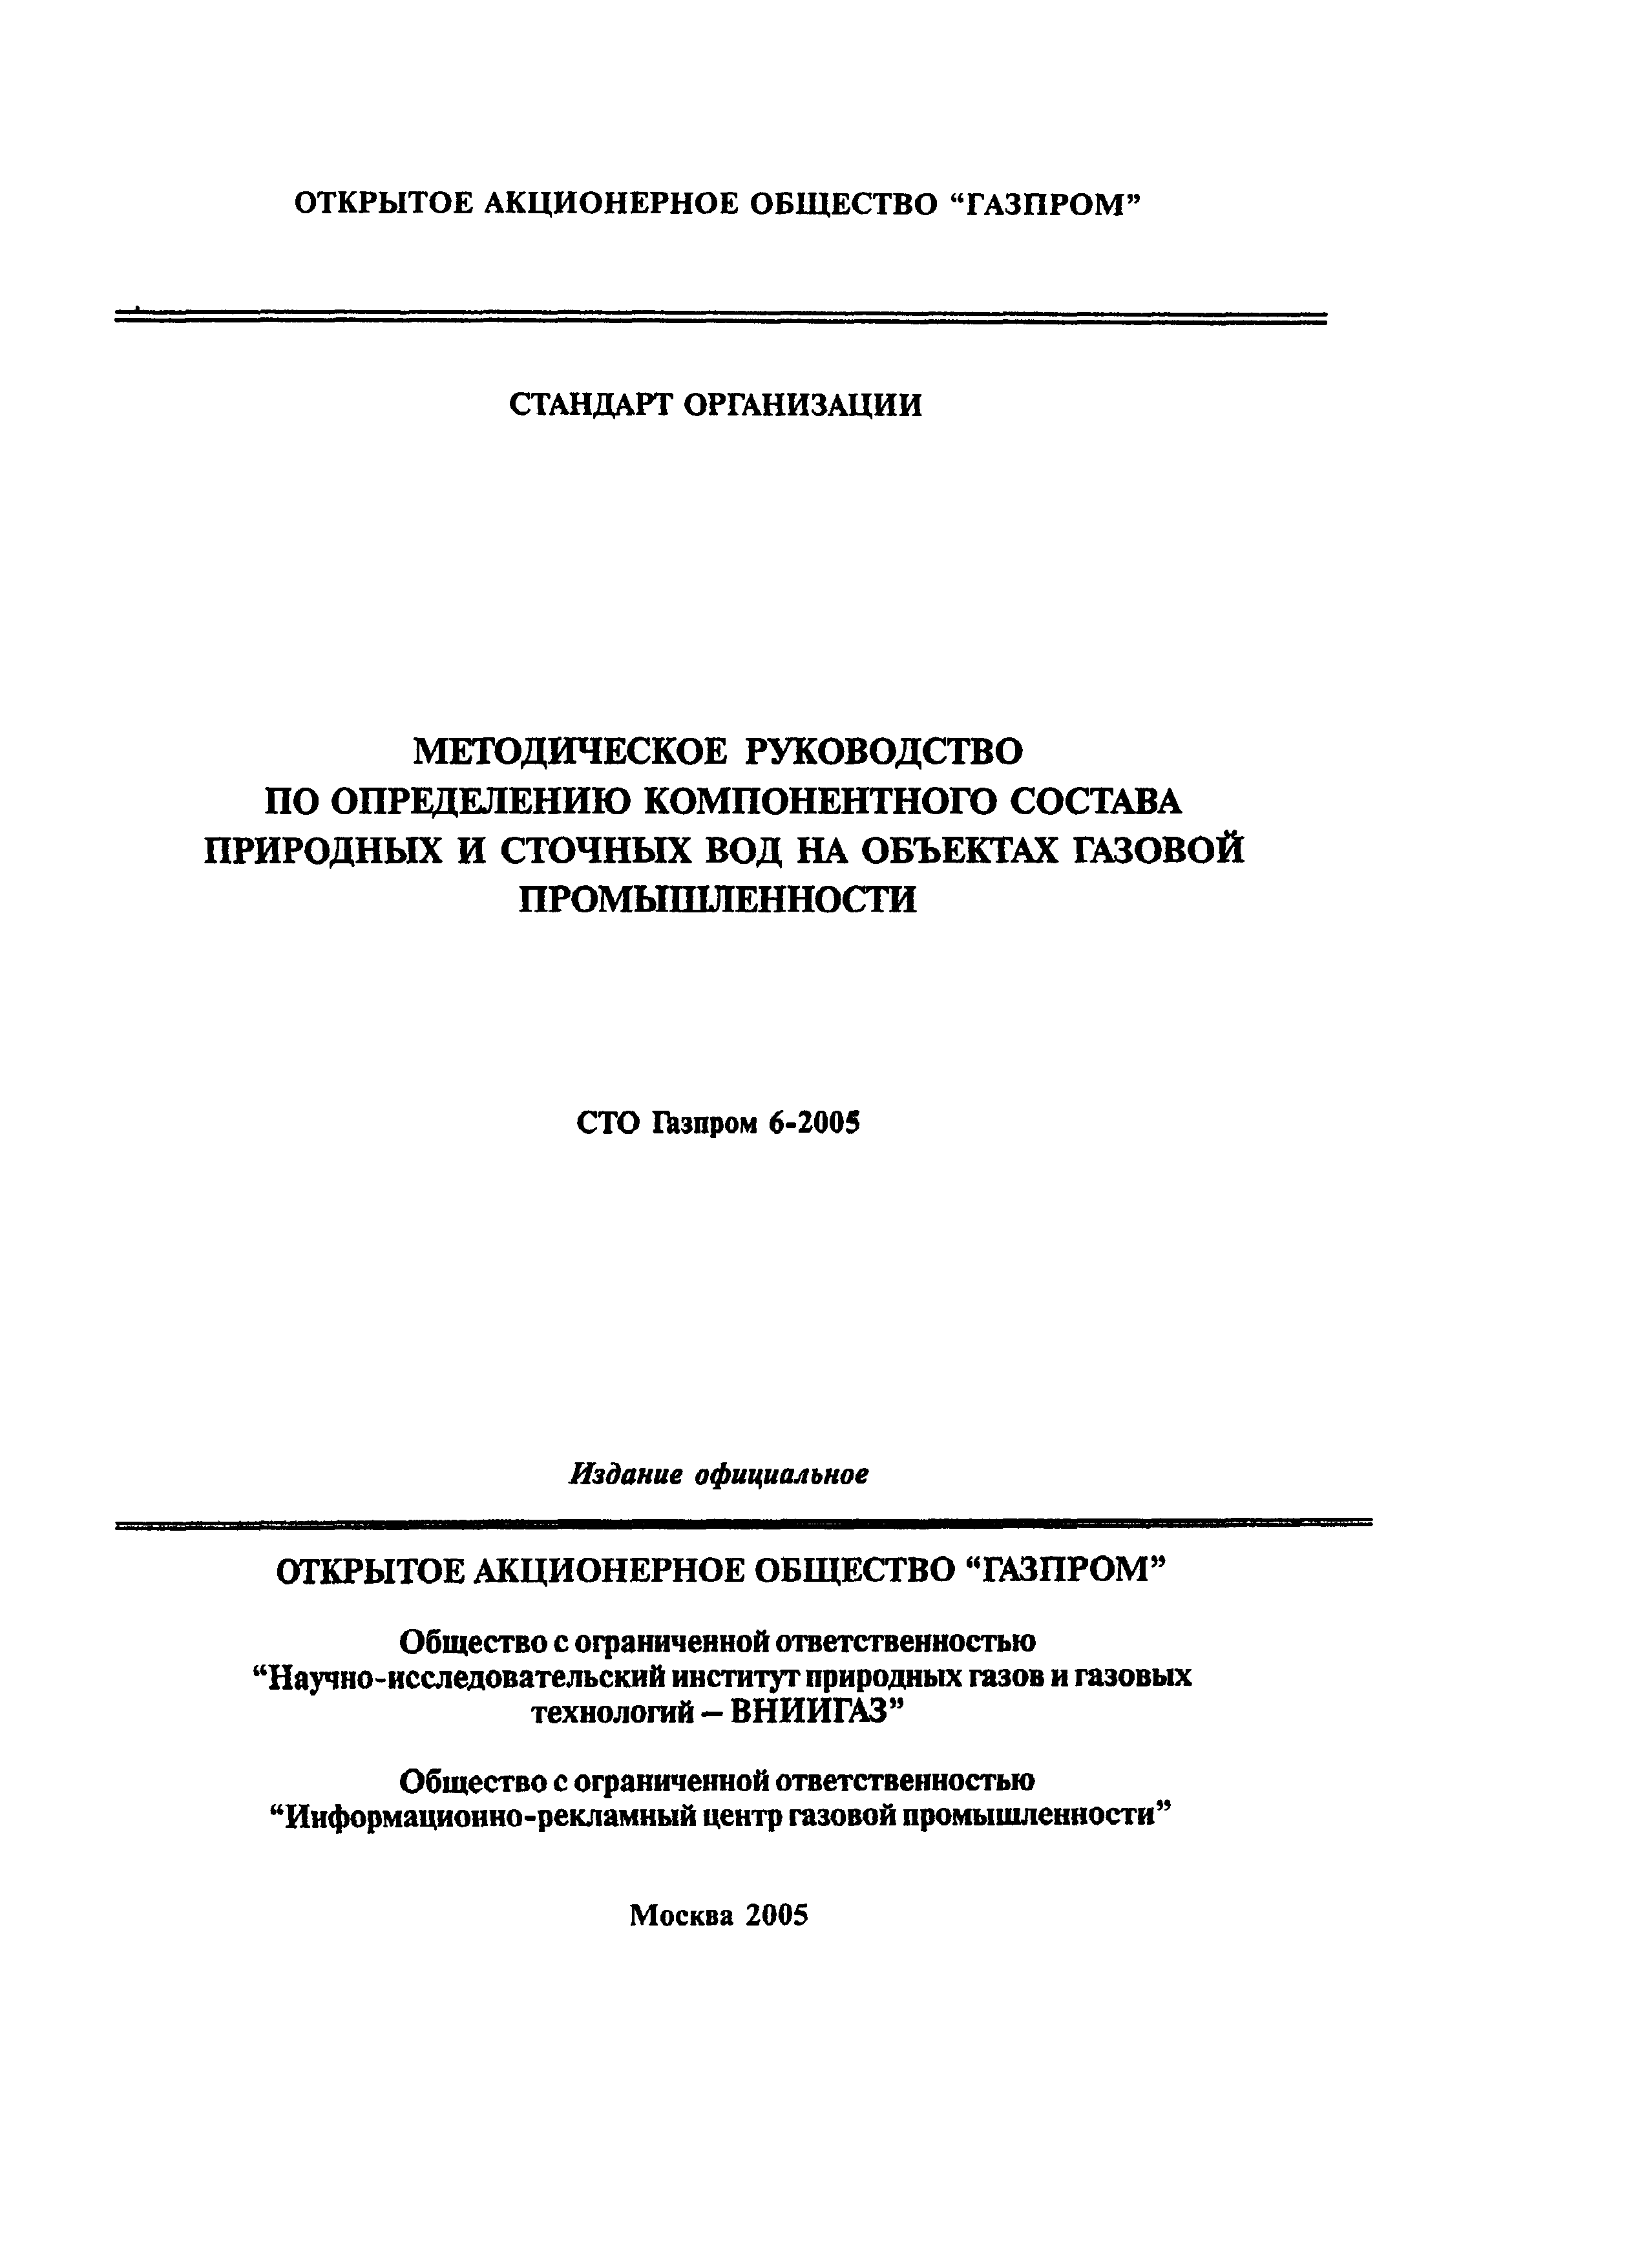 СТО Газпром 6-2005